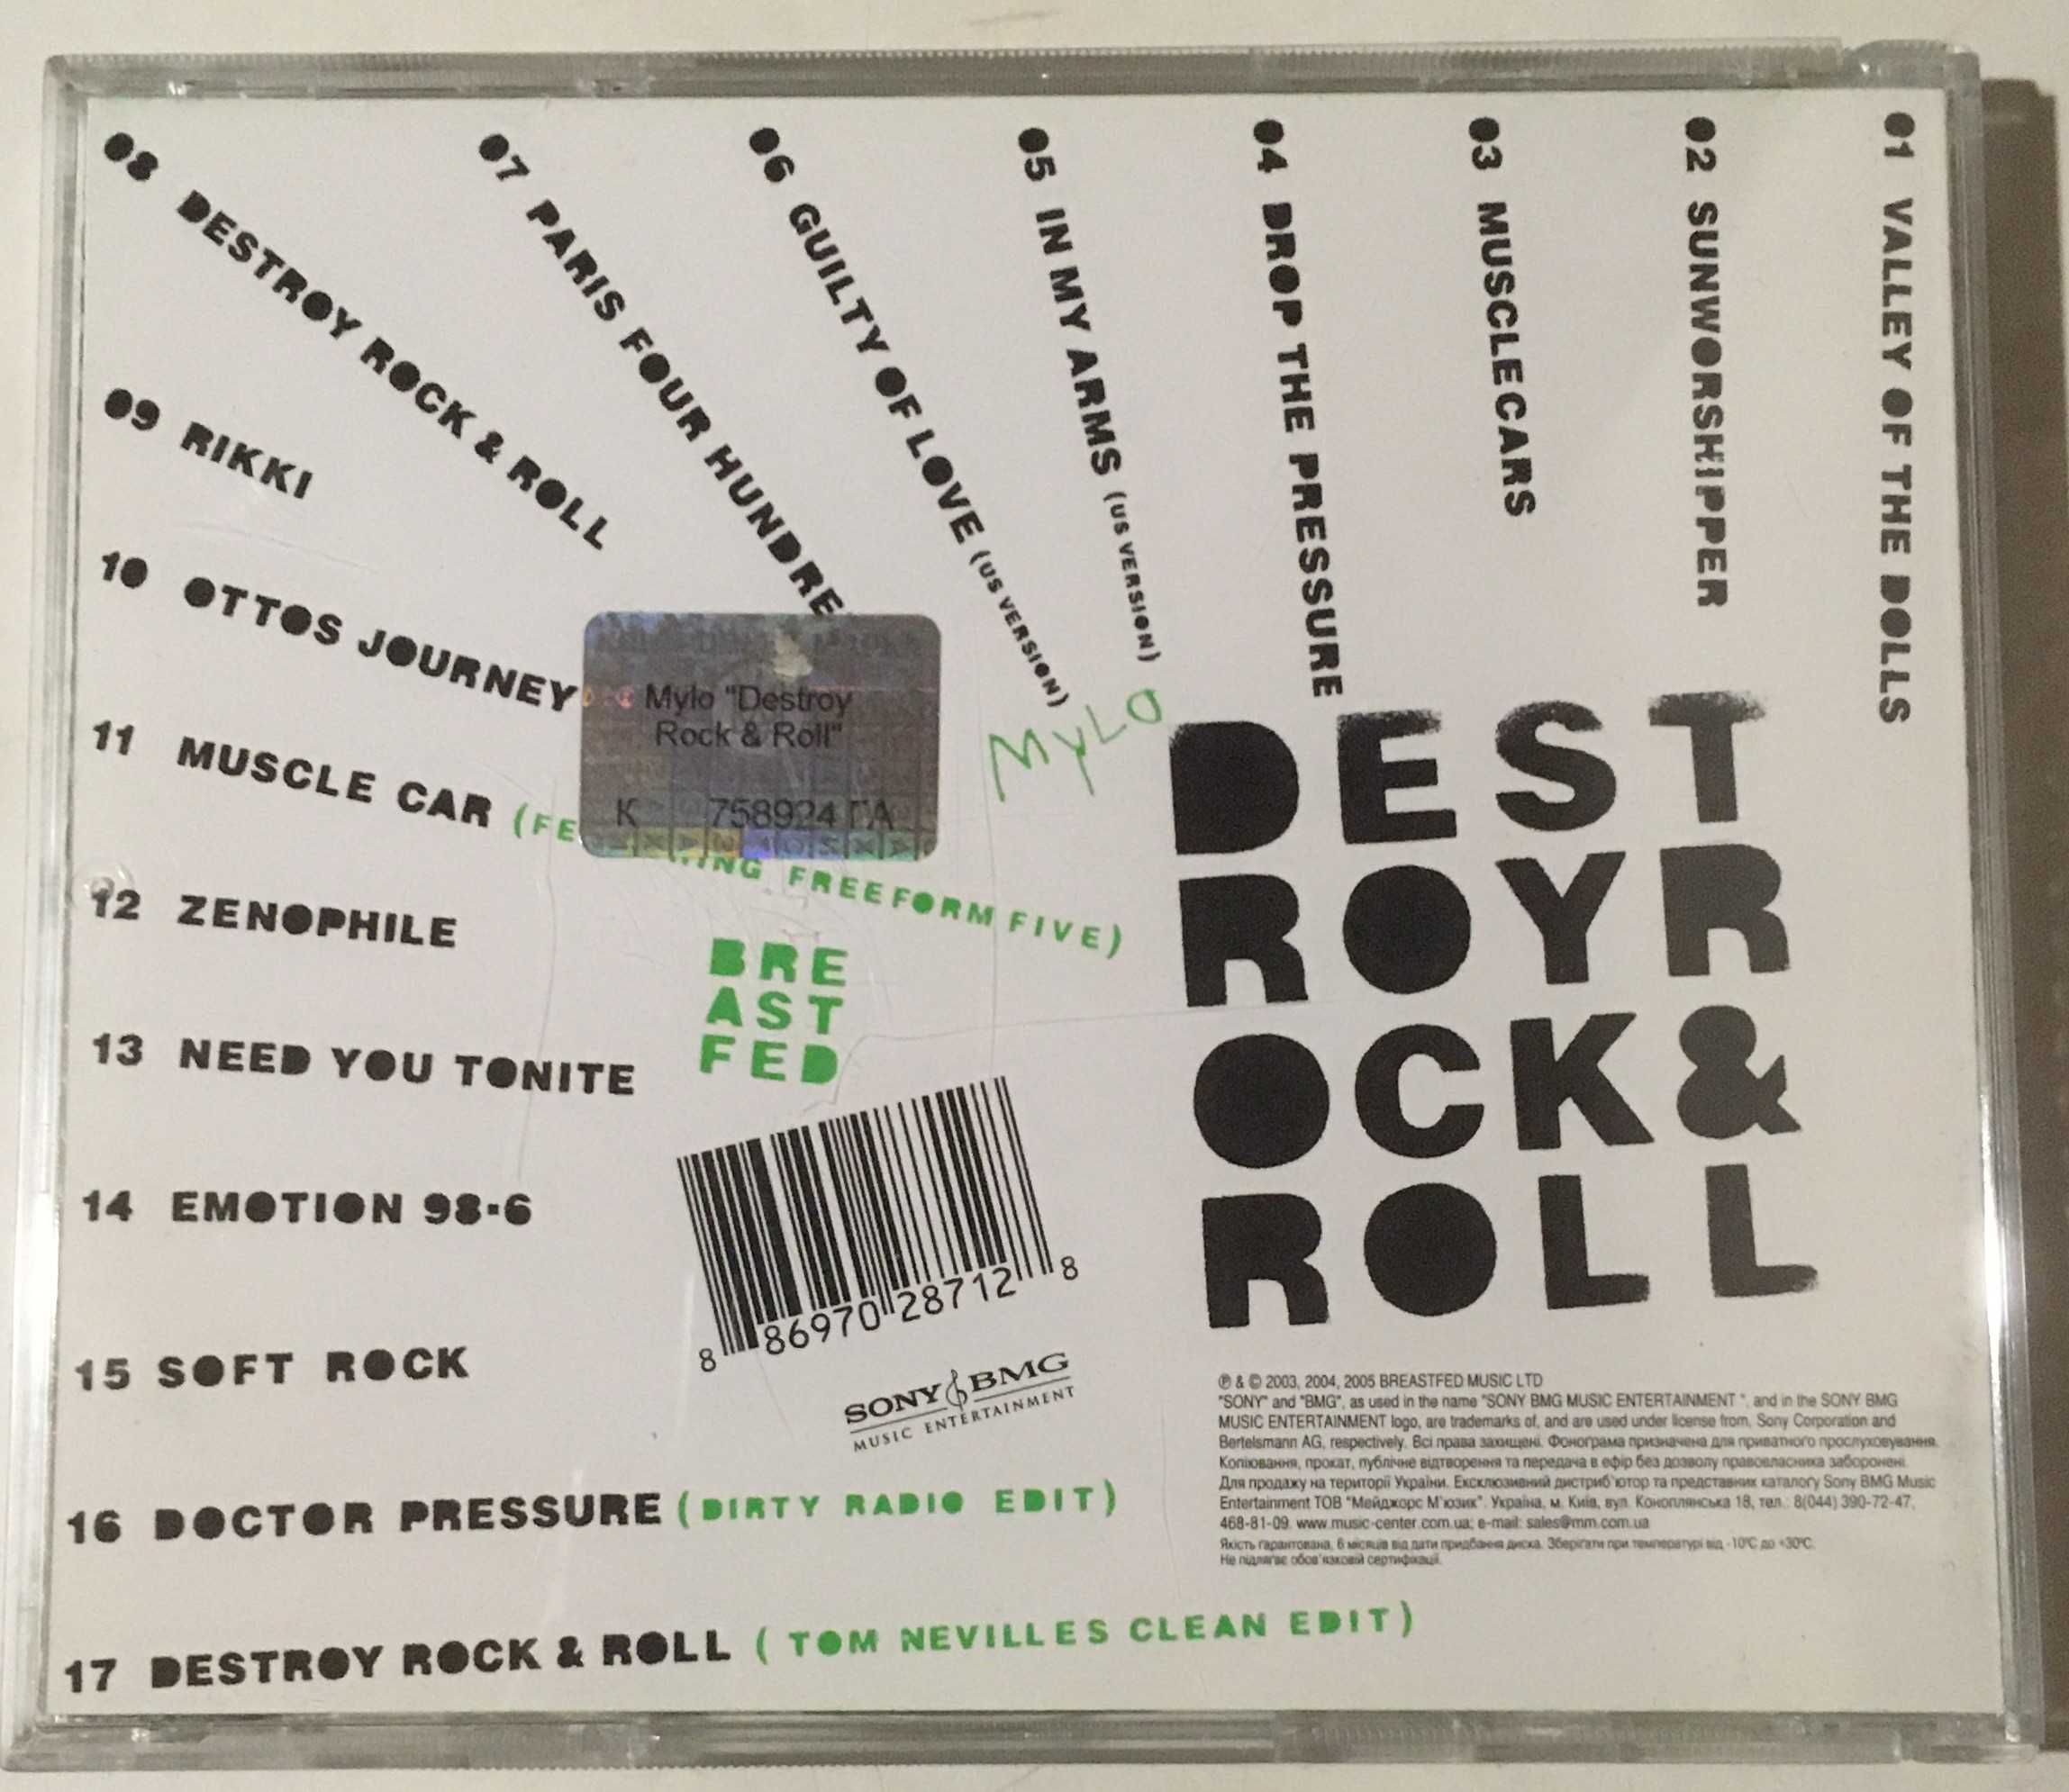 Mylo "Destroy Rock & Roll"